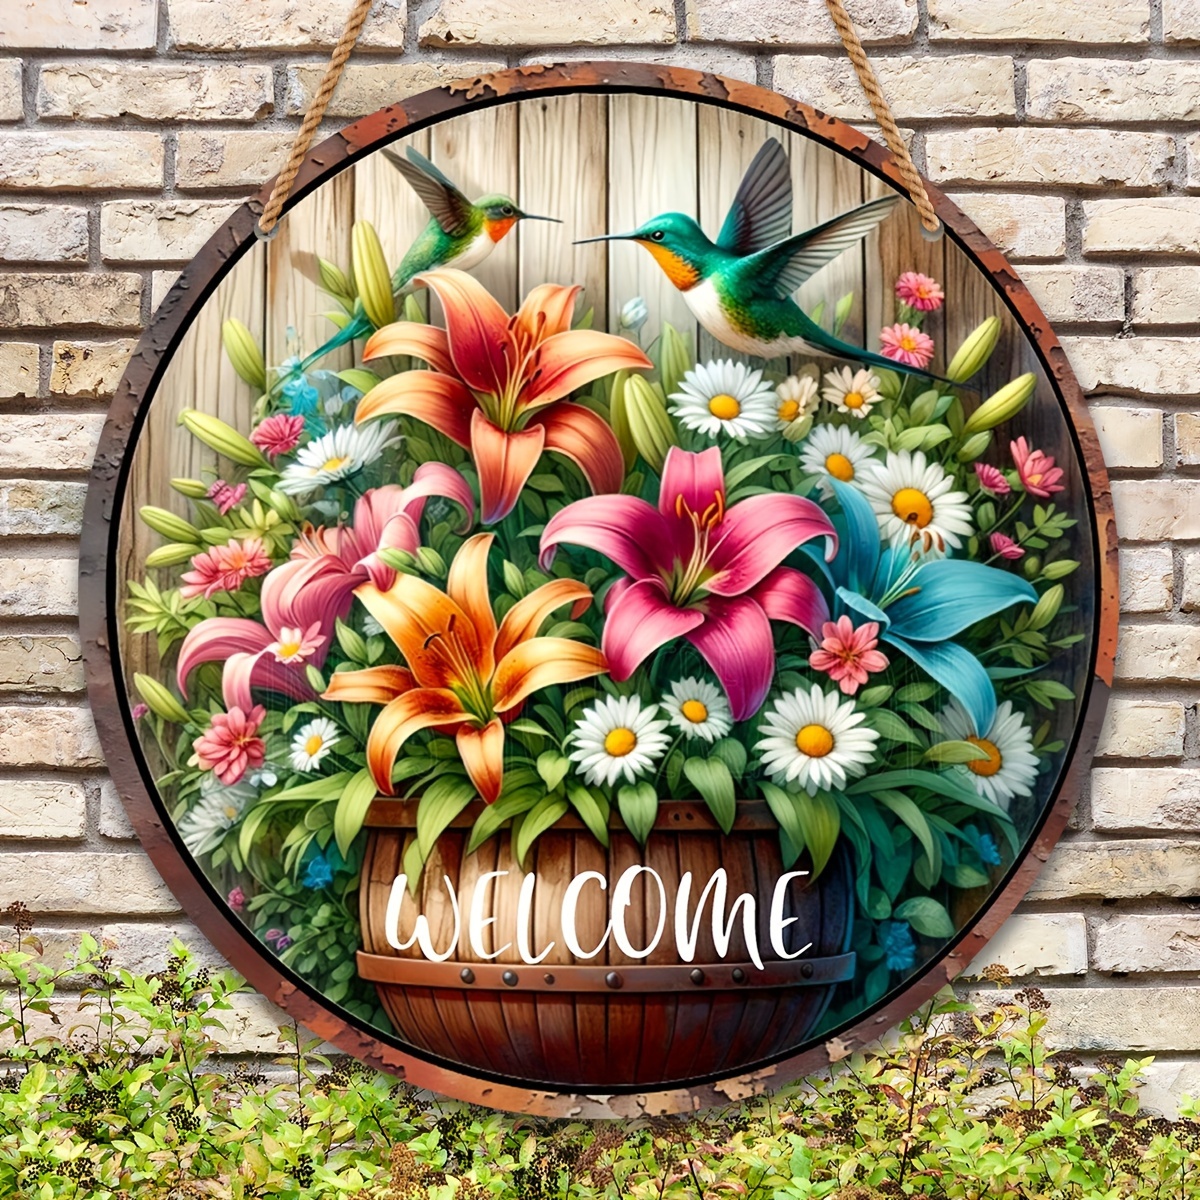 

1pc, 3d Acrylic Hummingbird Welcome Sign, Floral Wreath Door Decor, Rustic Farmhouse Wall Decor, Vibrant Spring Garden Theme, Perfect For Home & Porch Decoration